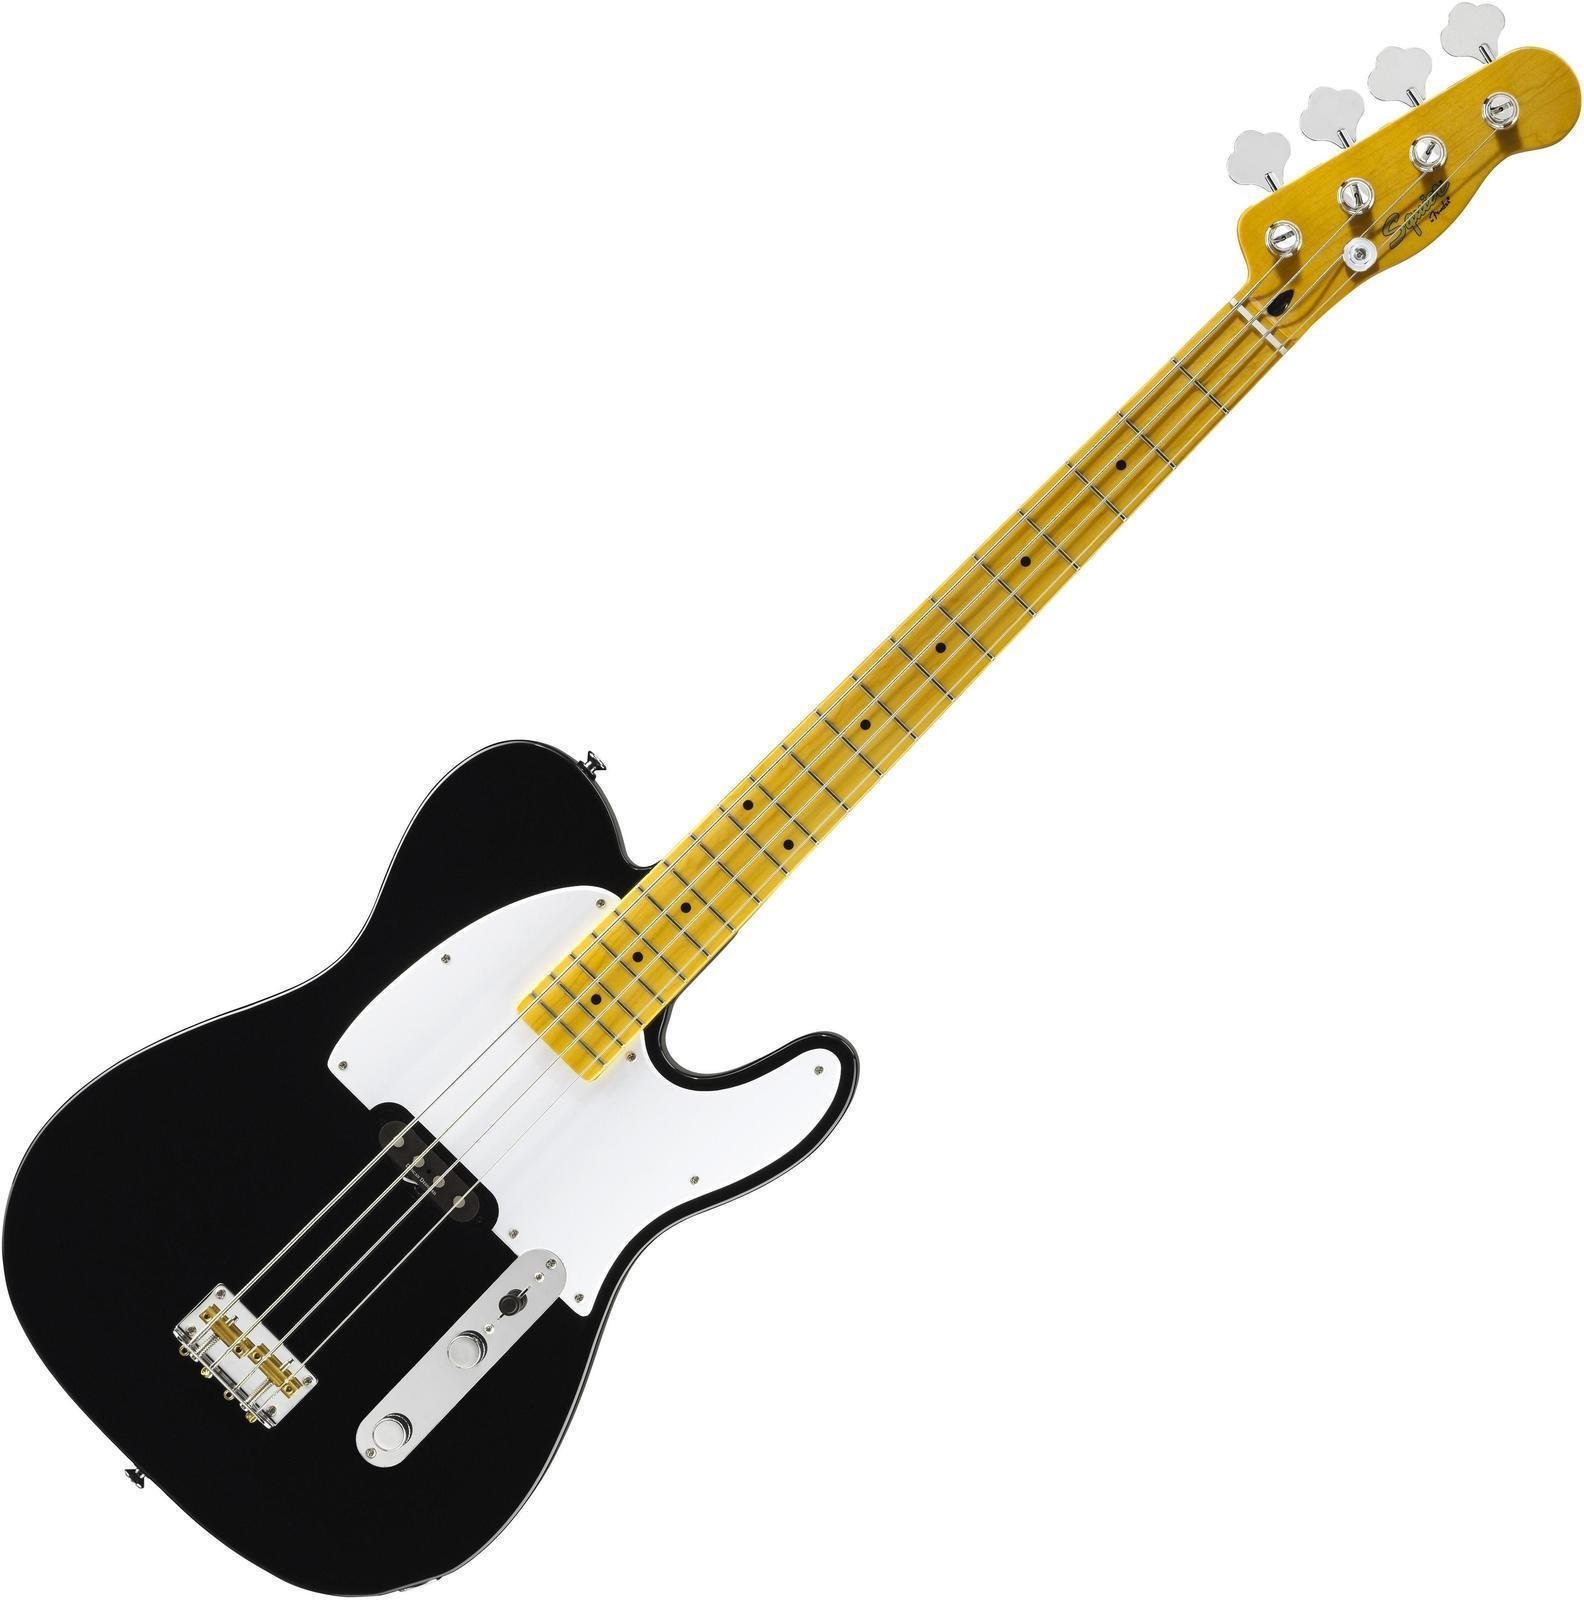 E-Bass Fender Squier Vintage Modified Telecaster Bass Black